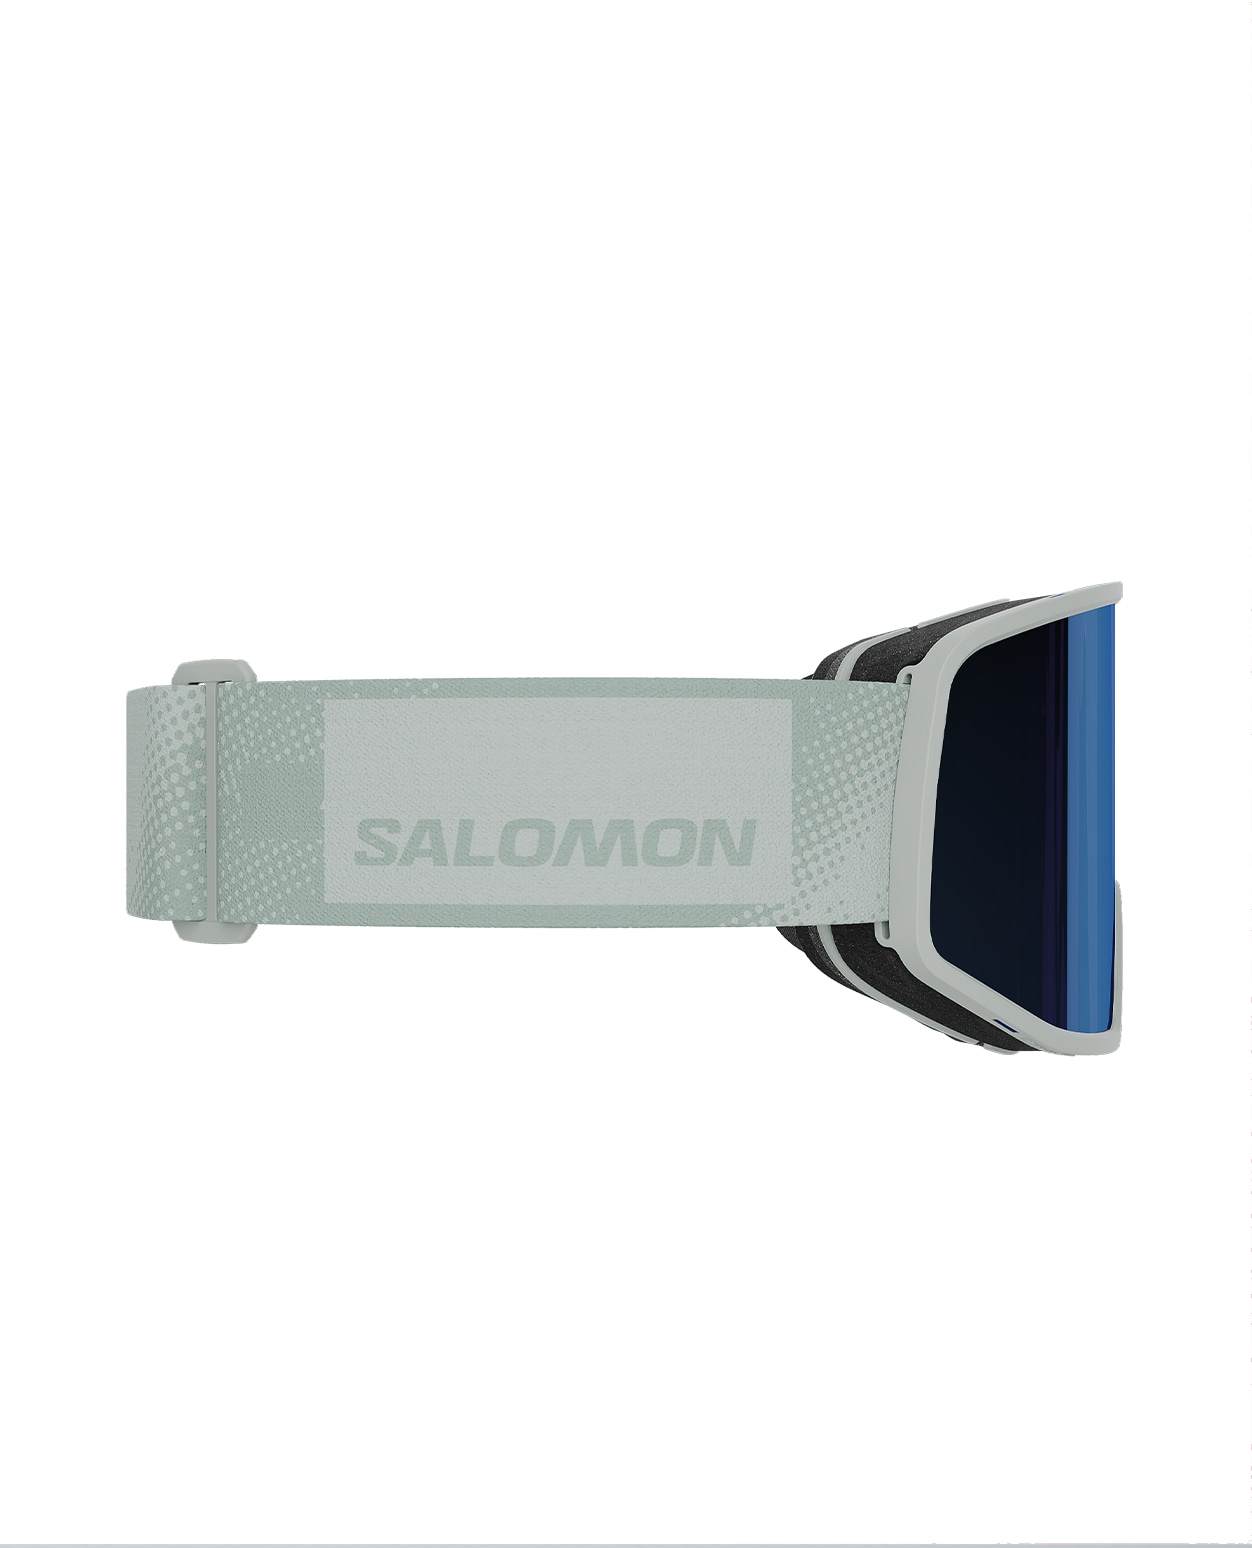 Salomon Sentry Pro Sigma White Moss/Univ SB